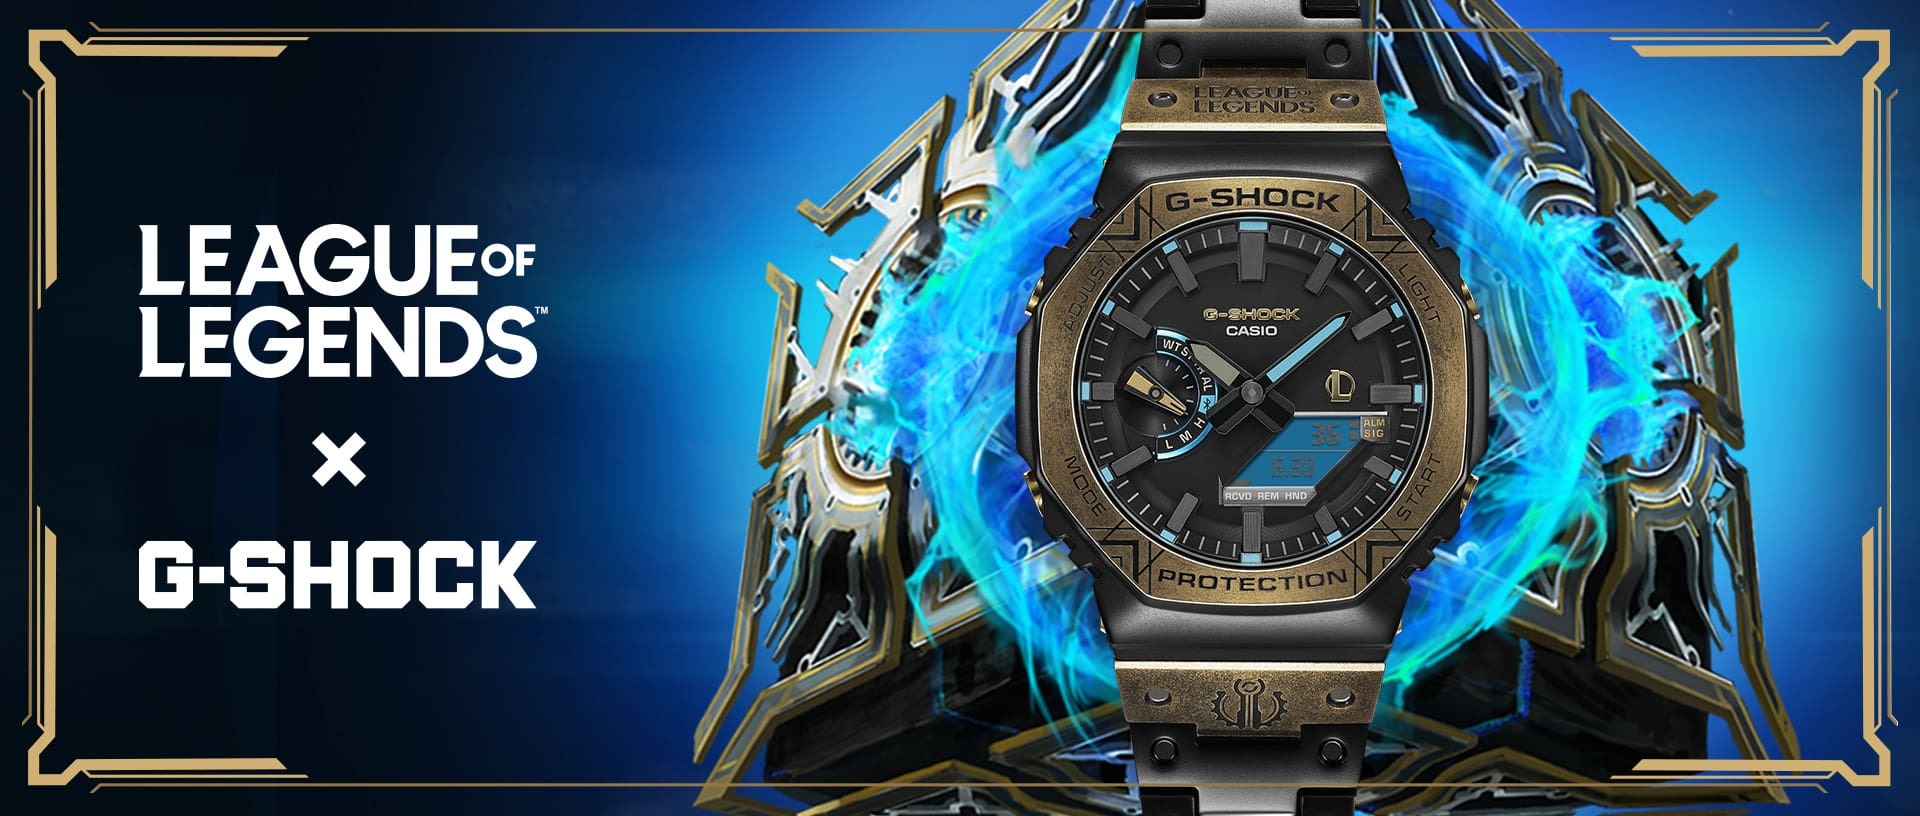 League of Legends & G-SHOCK Drop $1,100 Watches